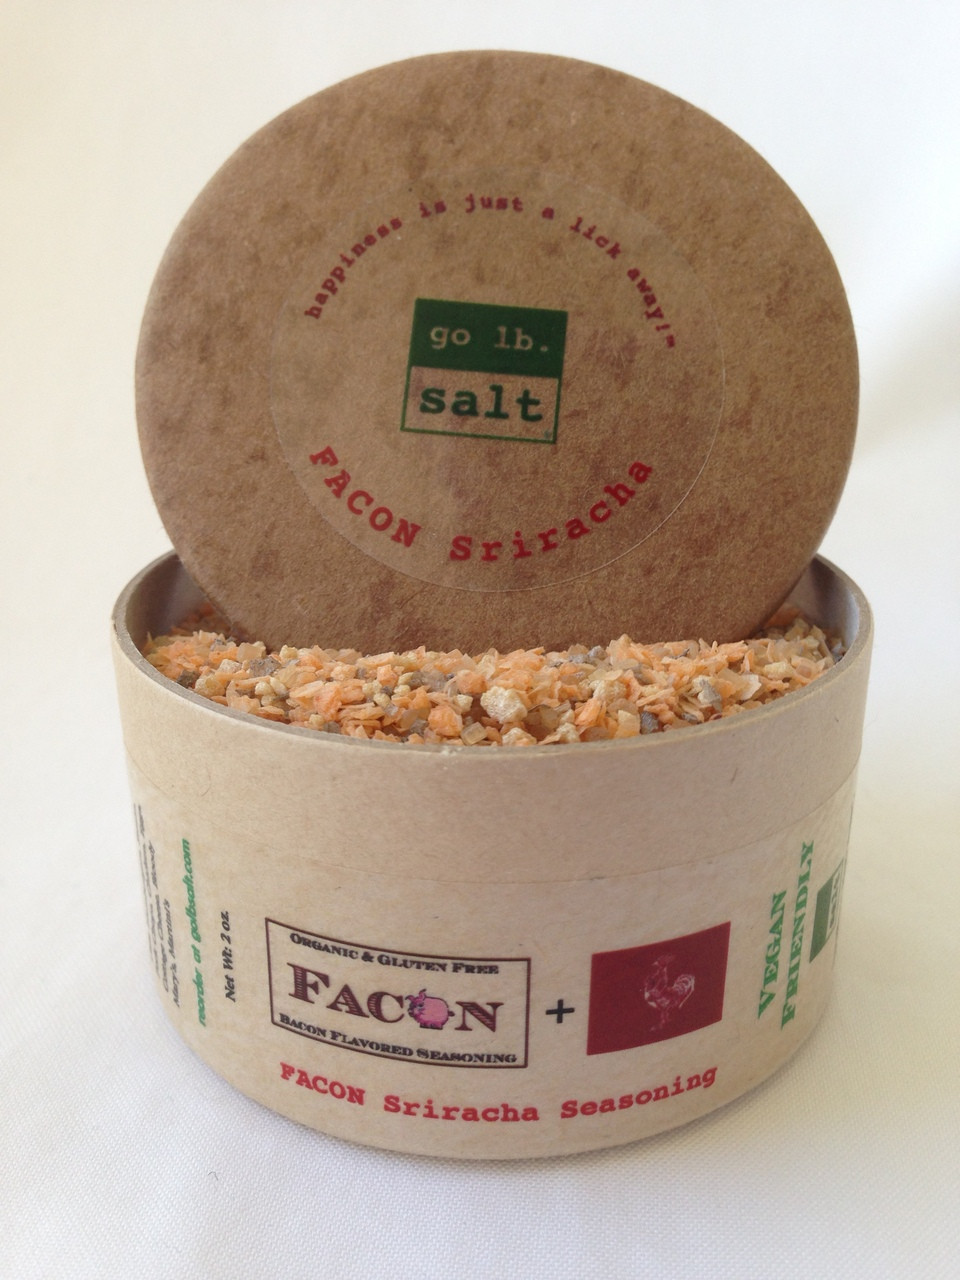 Original Bacon Salt - Bacon Flavored Seasoning